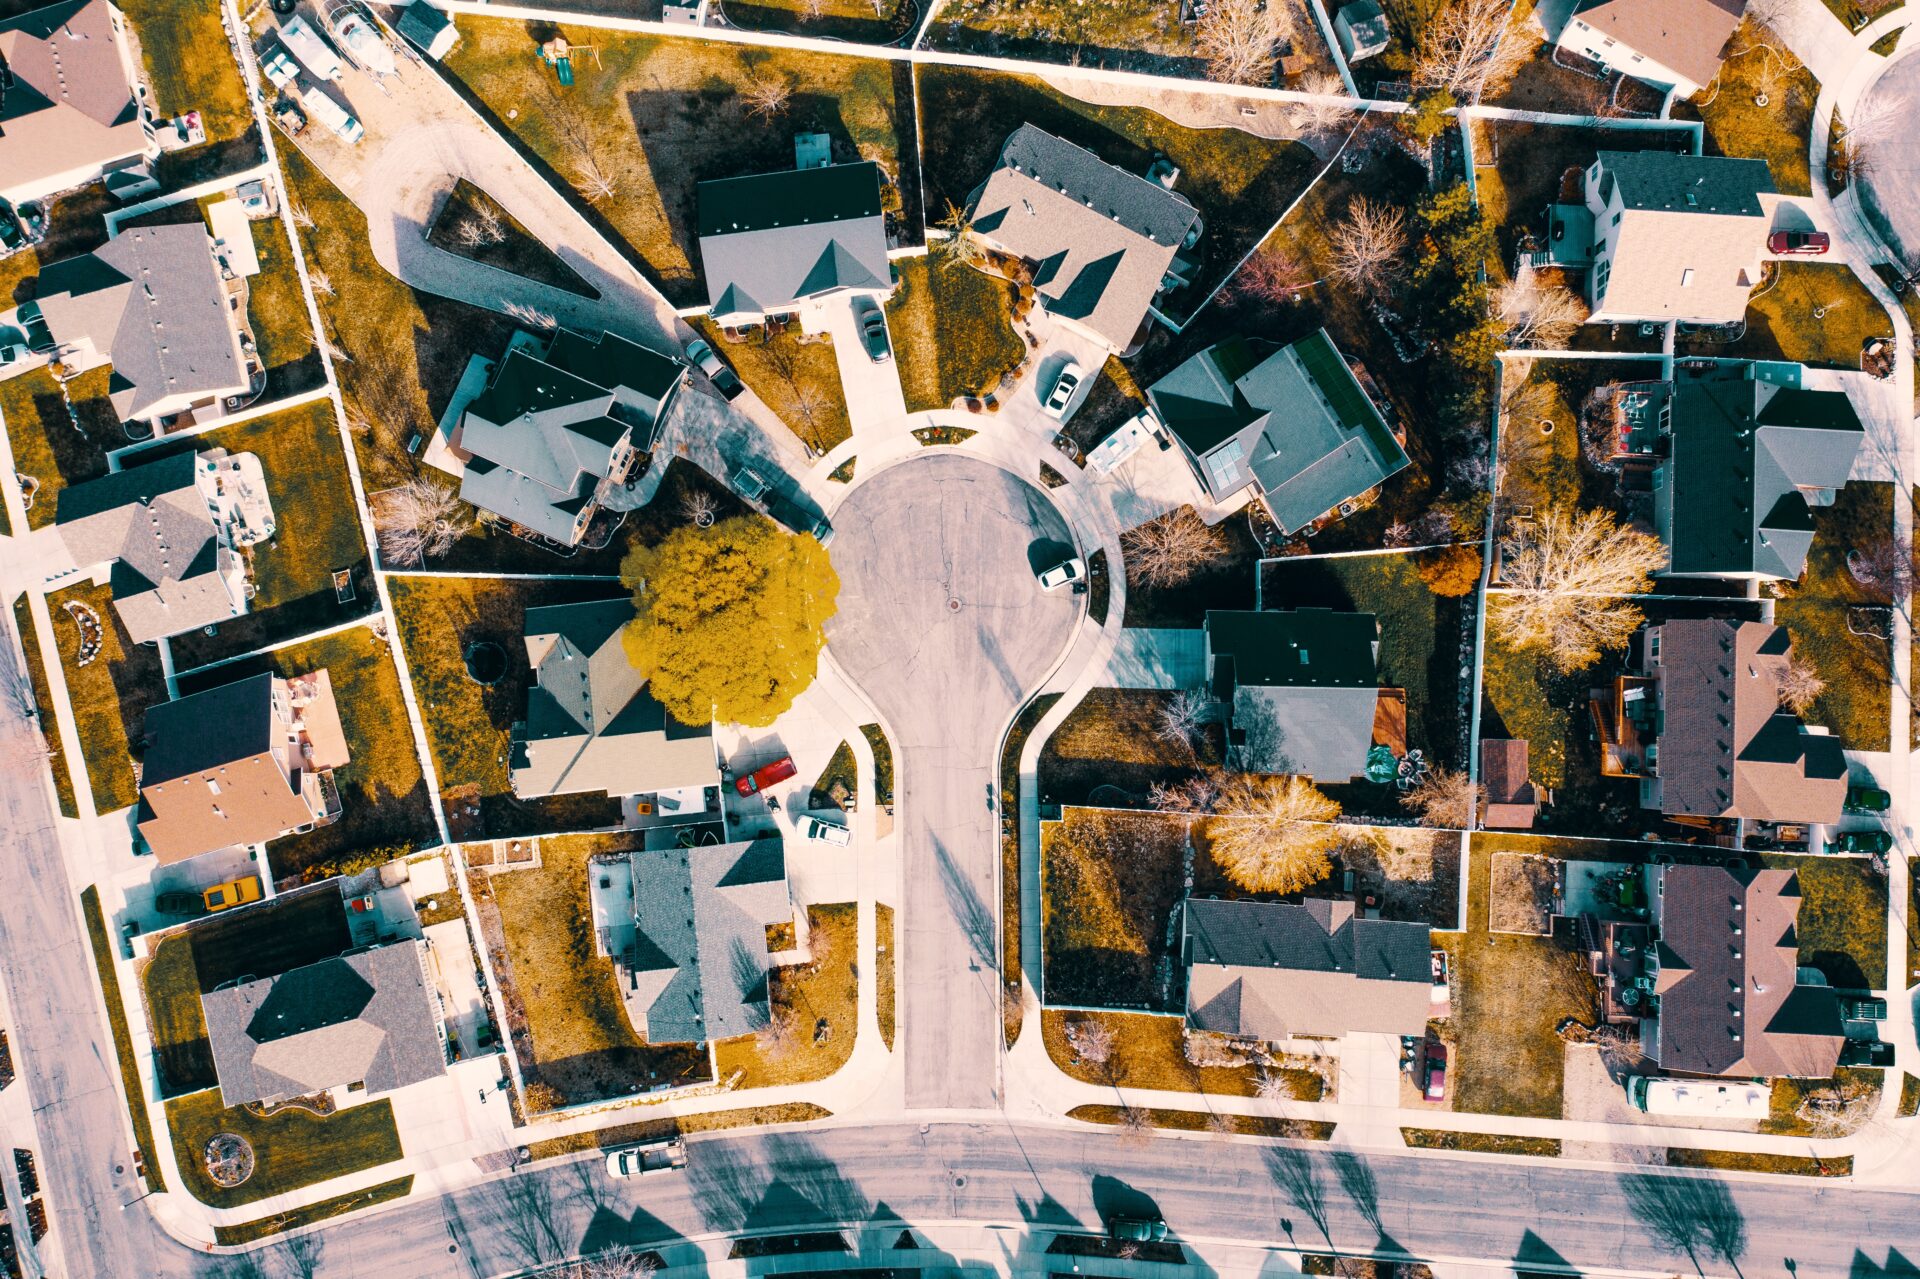 An overhead shot of houses in a neighborhood.